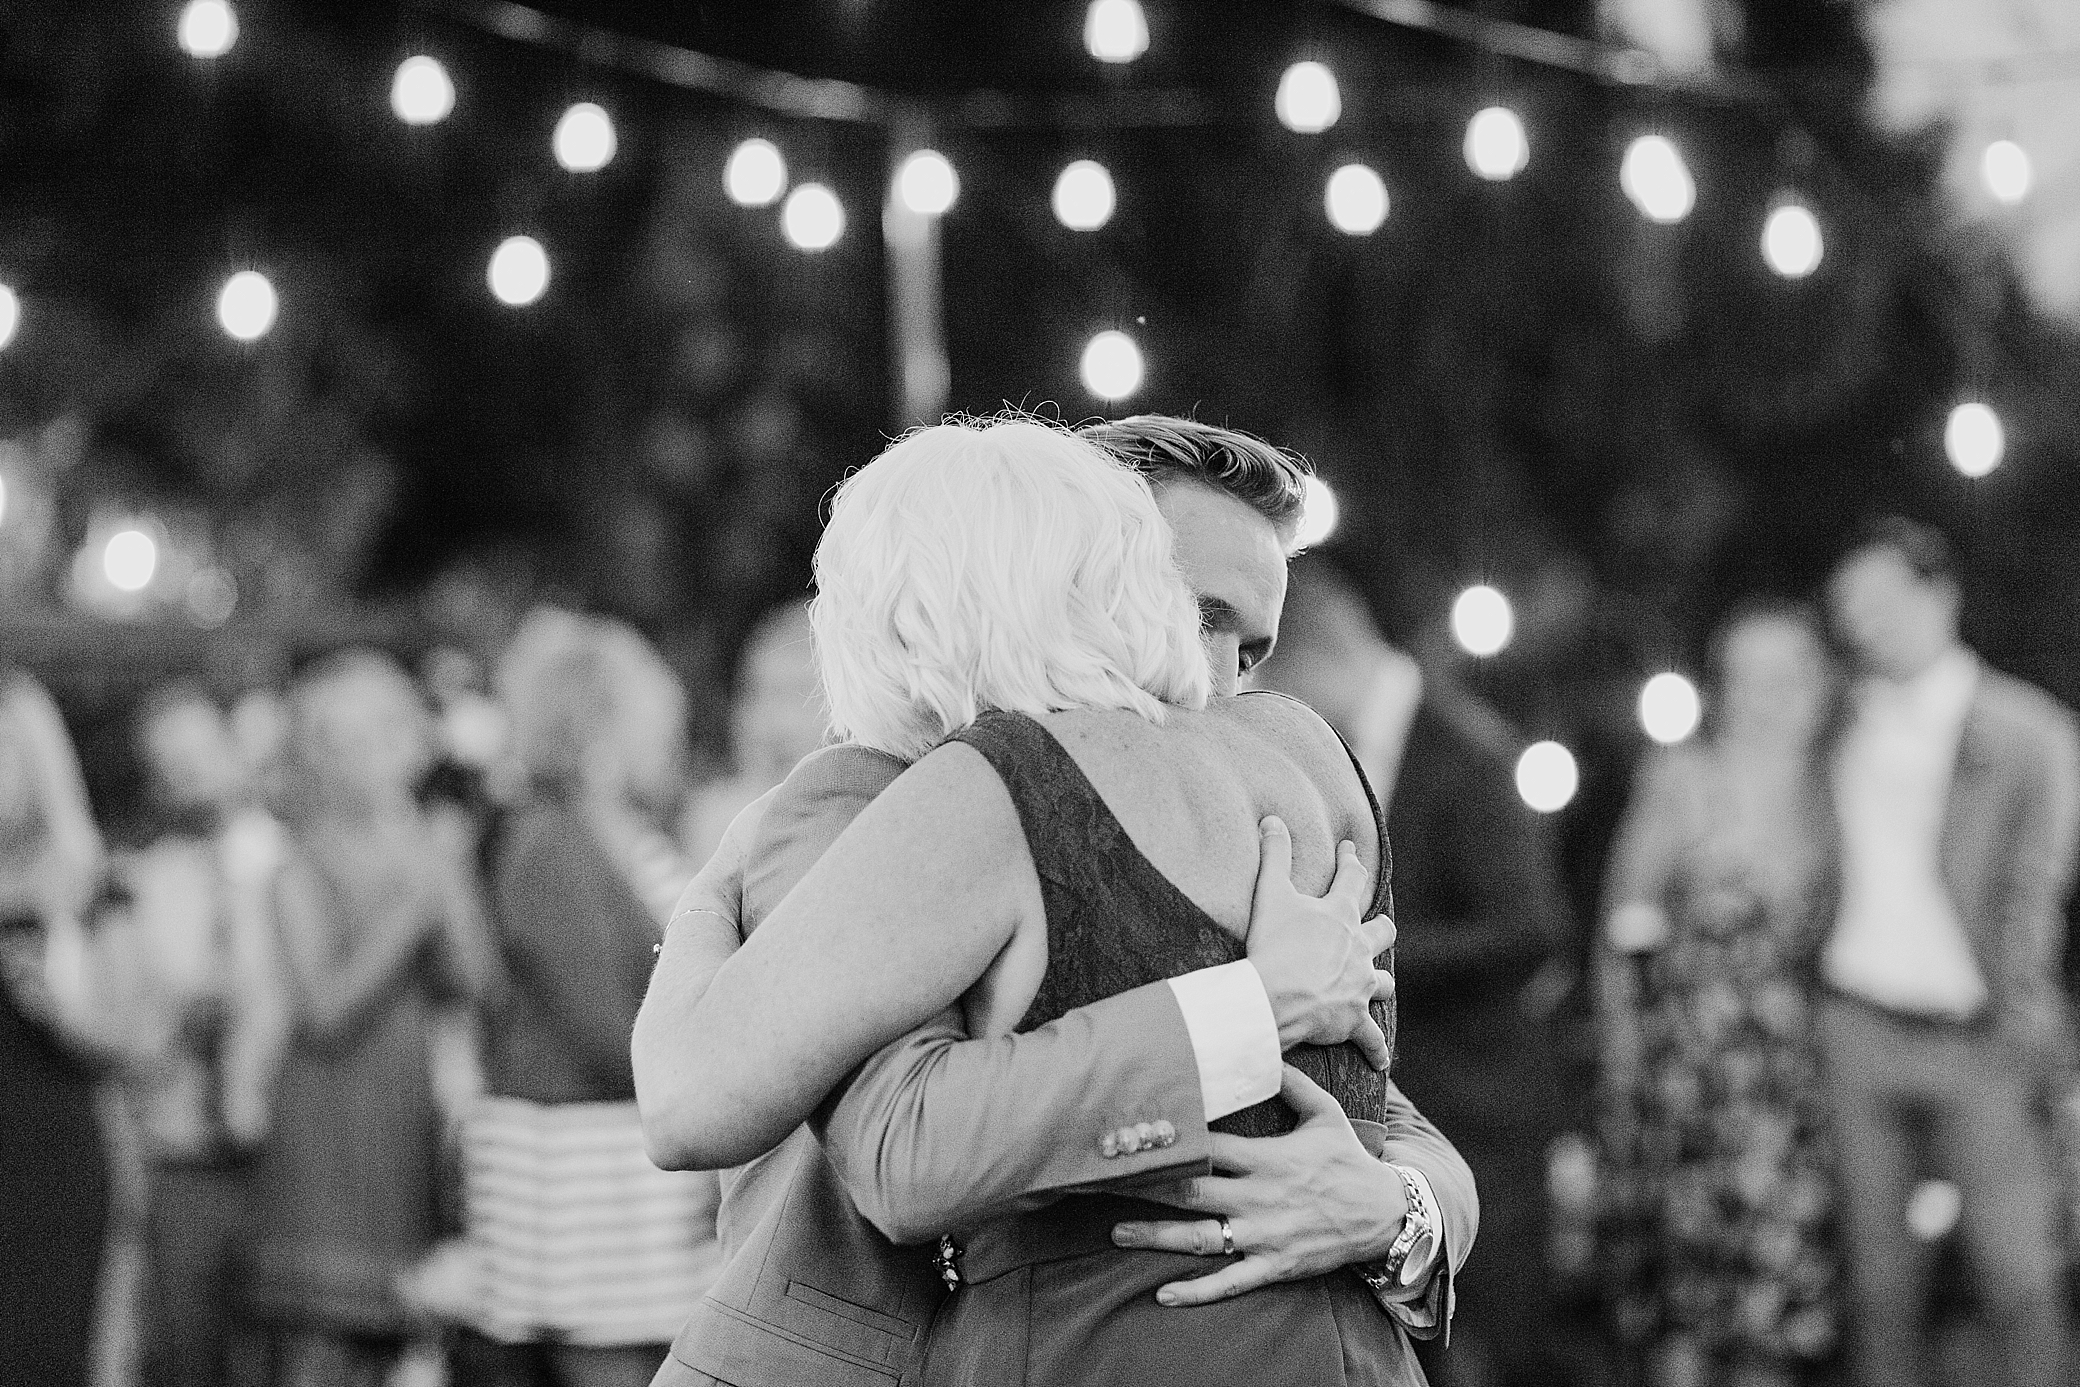 Mother and Groom dance at backyard wedding reception | Megan Montalvo Photography